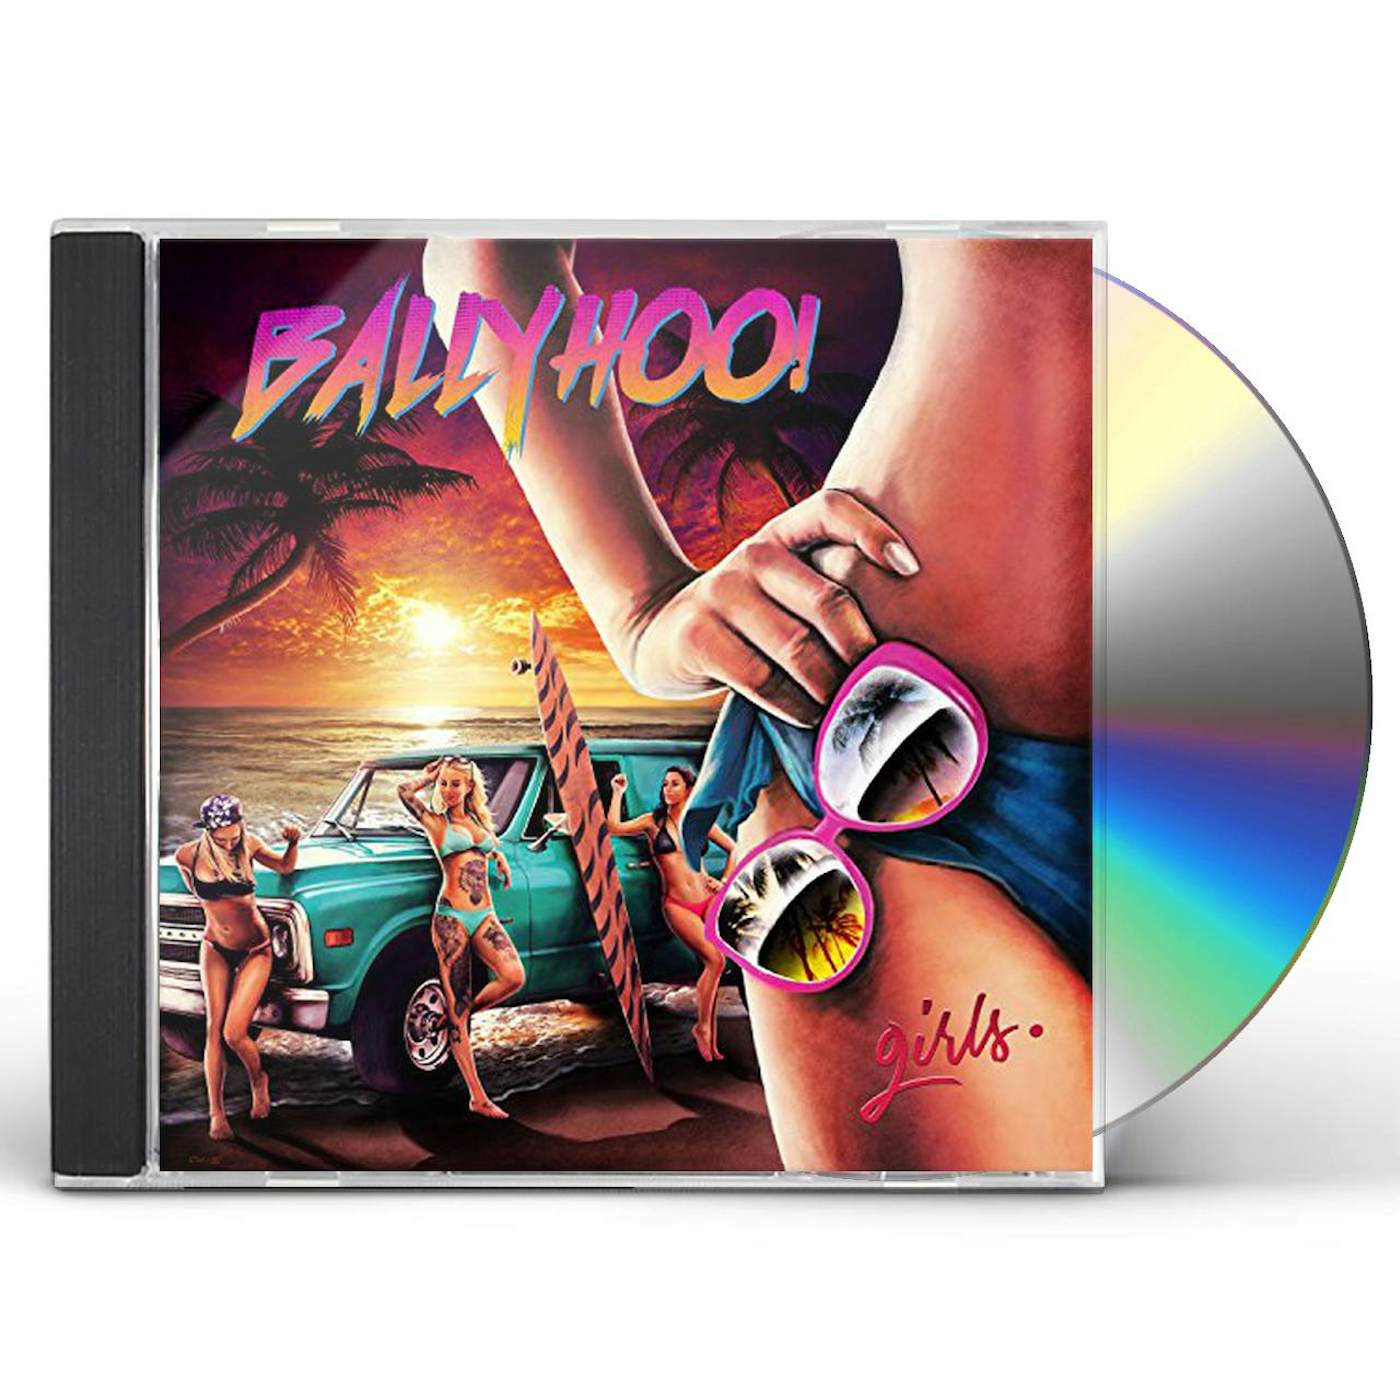 Ballyhoo! GIRLS CD